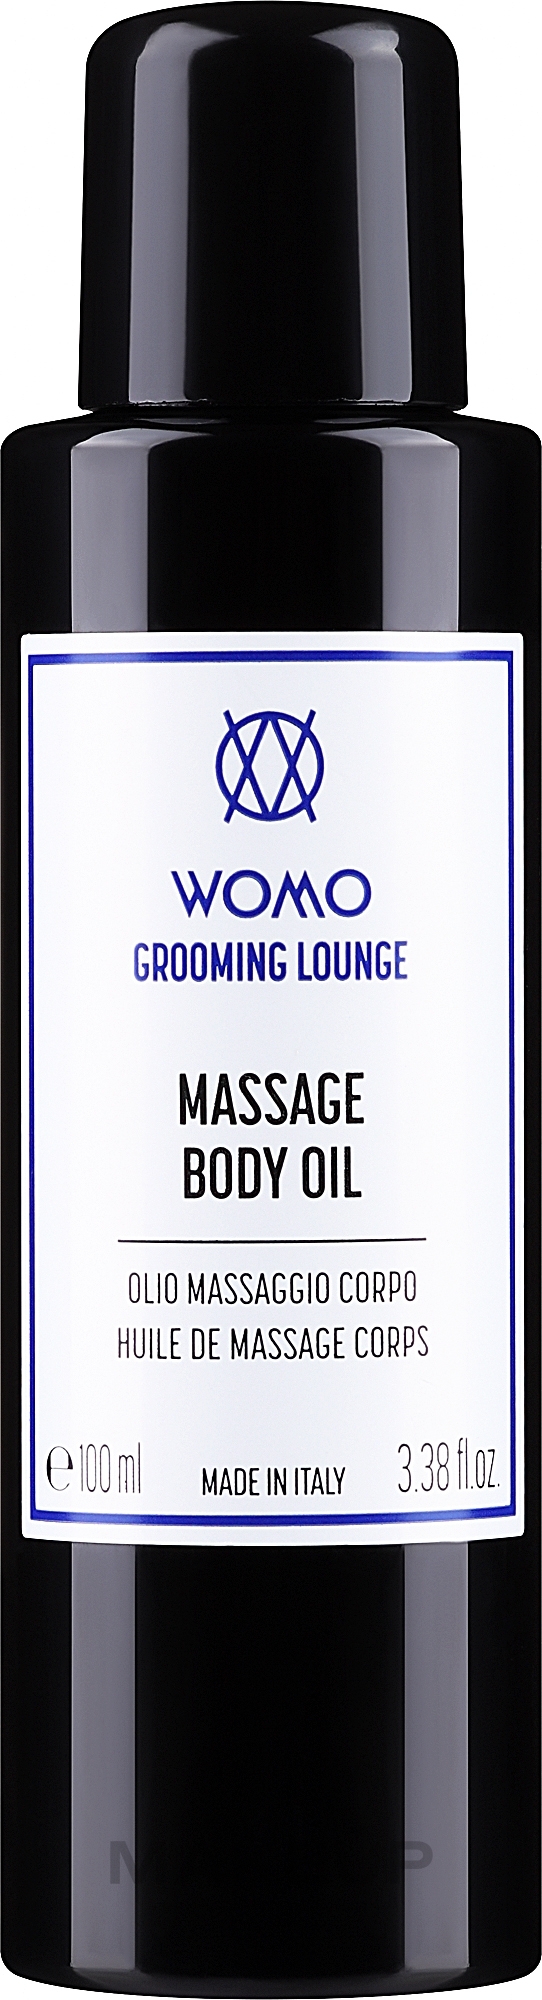 Массажное масло для тела - Womo Grooming Lounge Massage Body Oil — фото 100ml